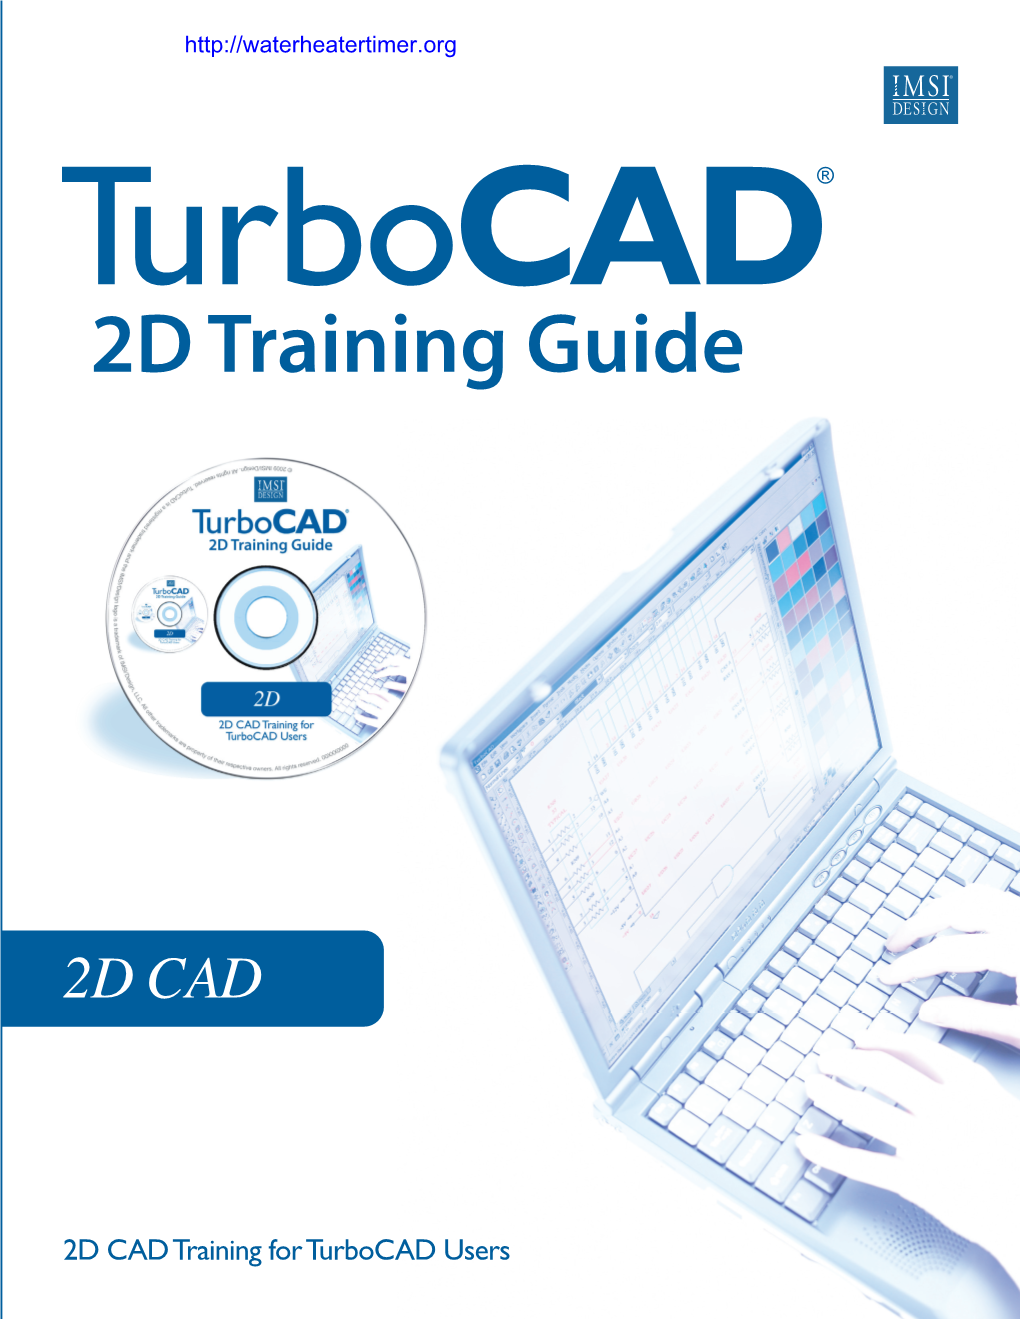 Turbocad 2D Training Guide